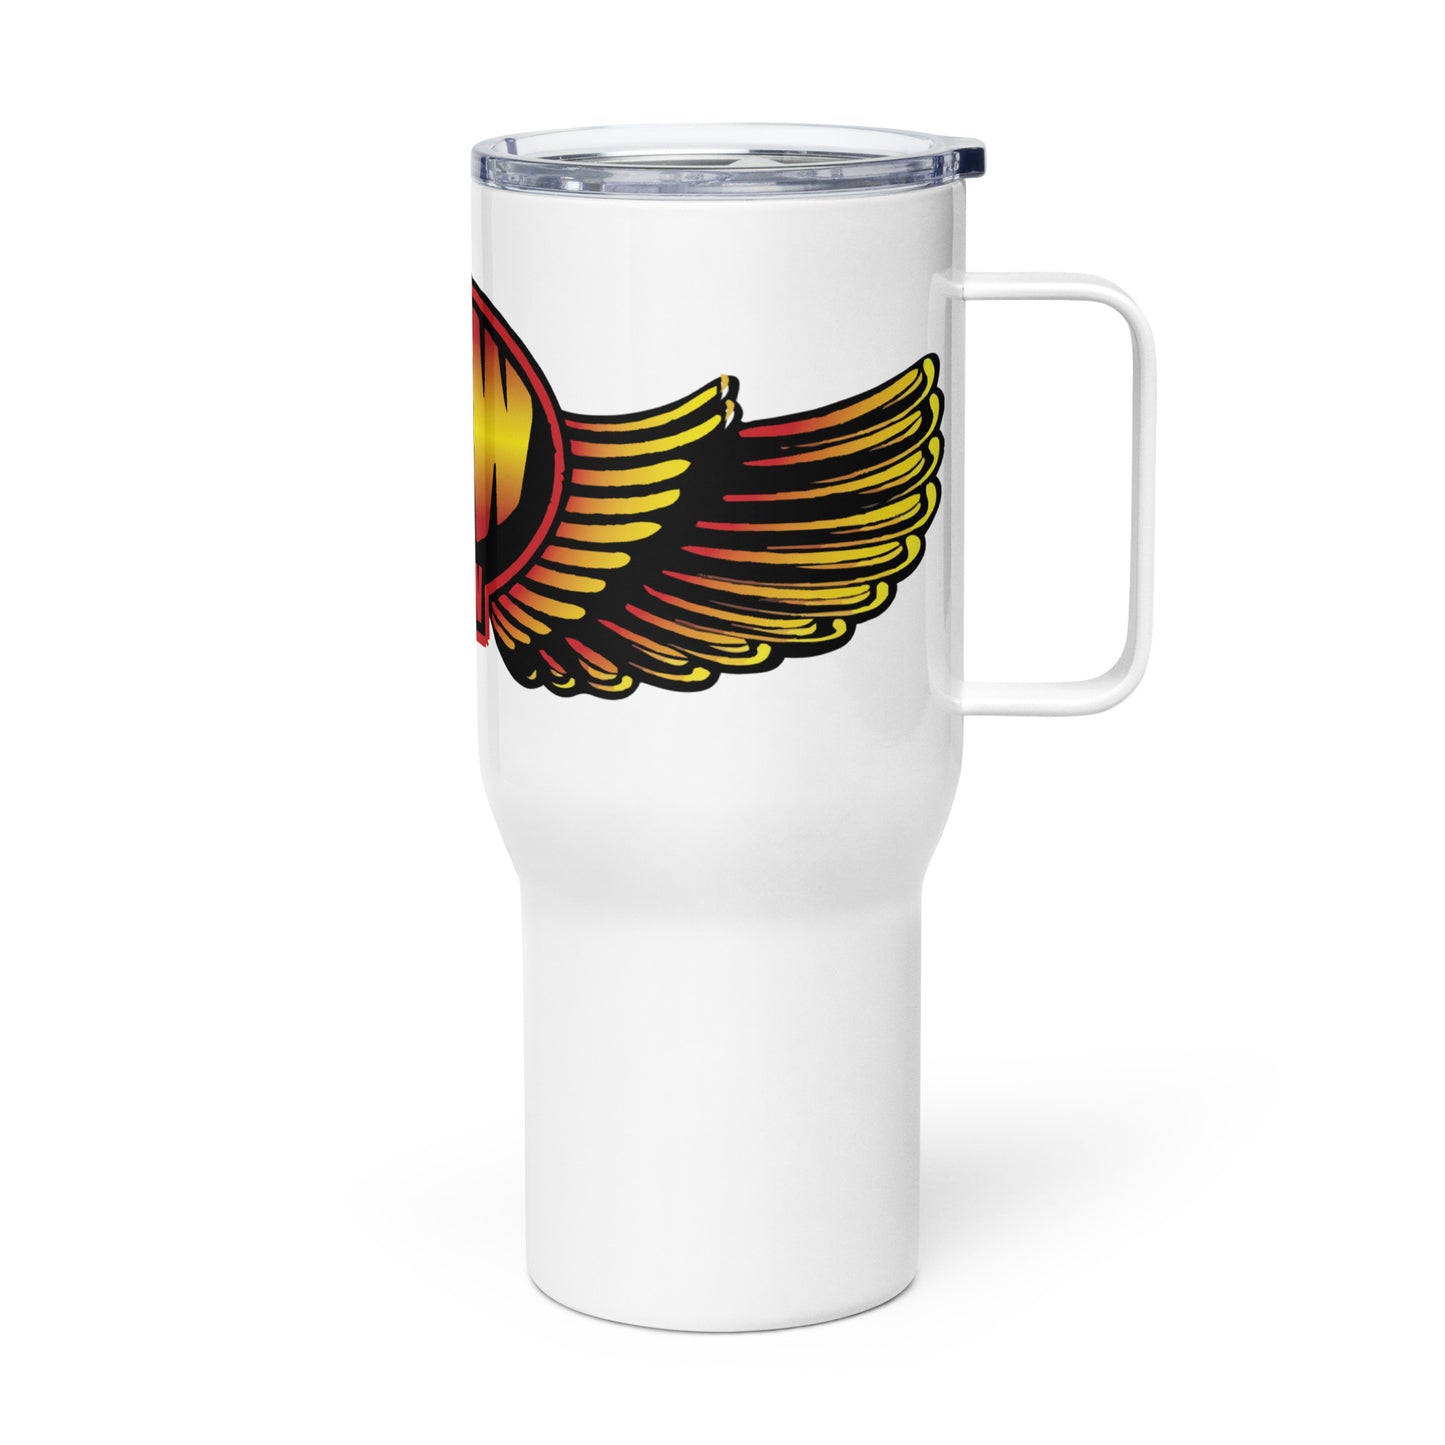 JCW Travel mug with a handle